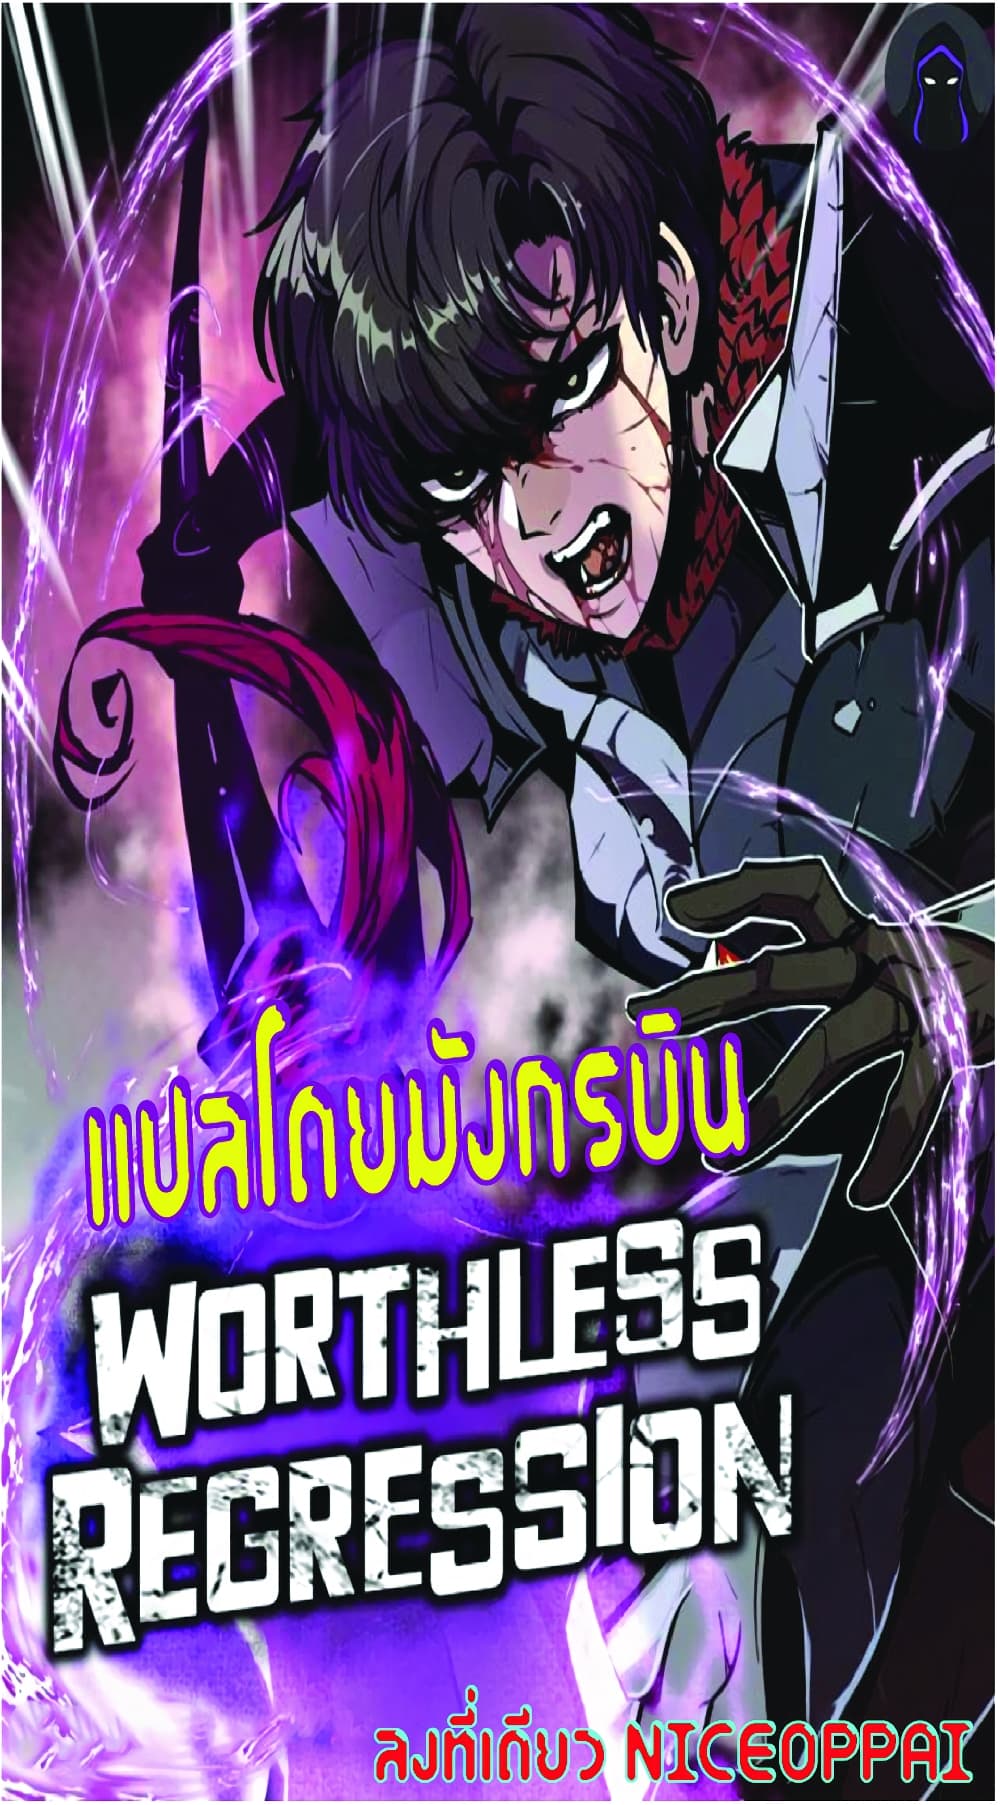 Worthless Regression 39 01